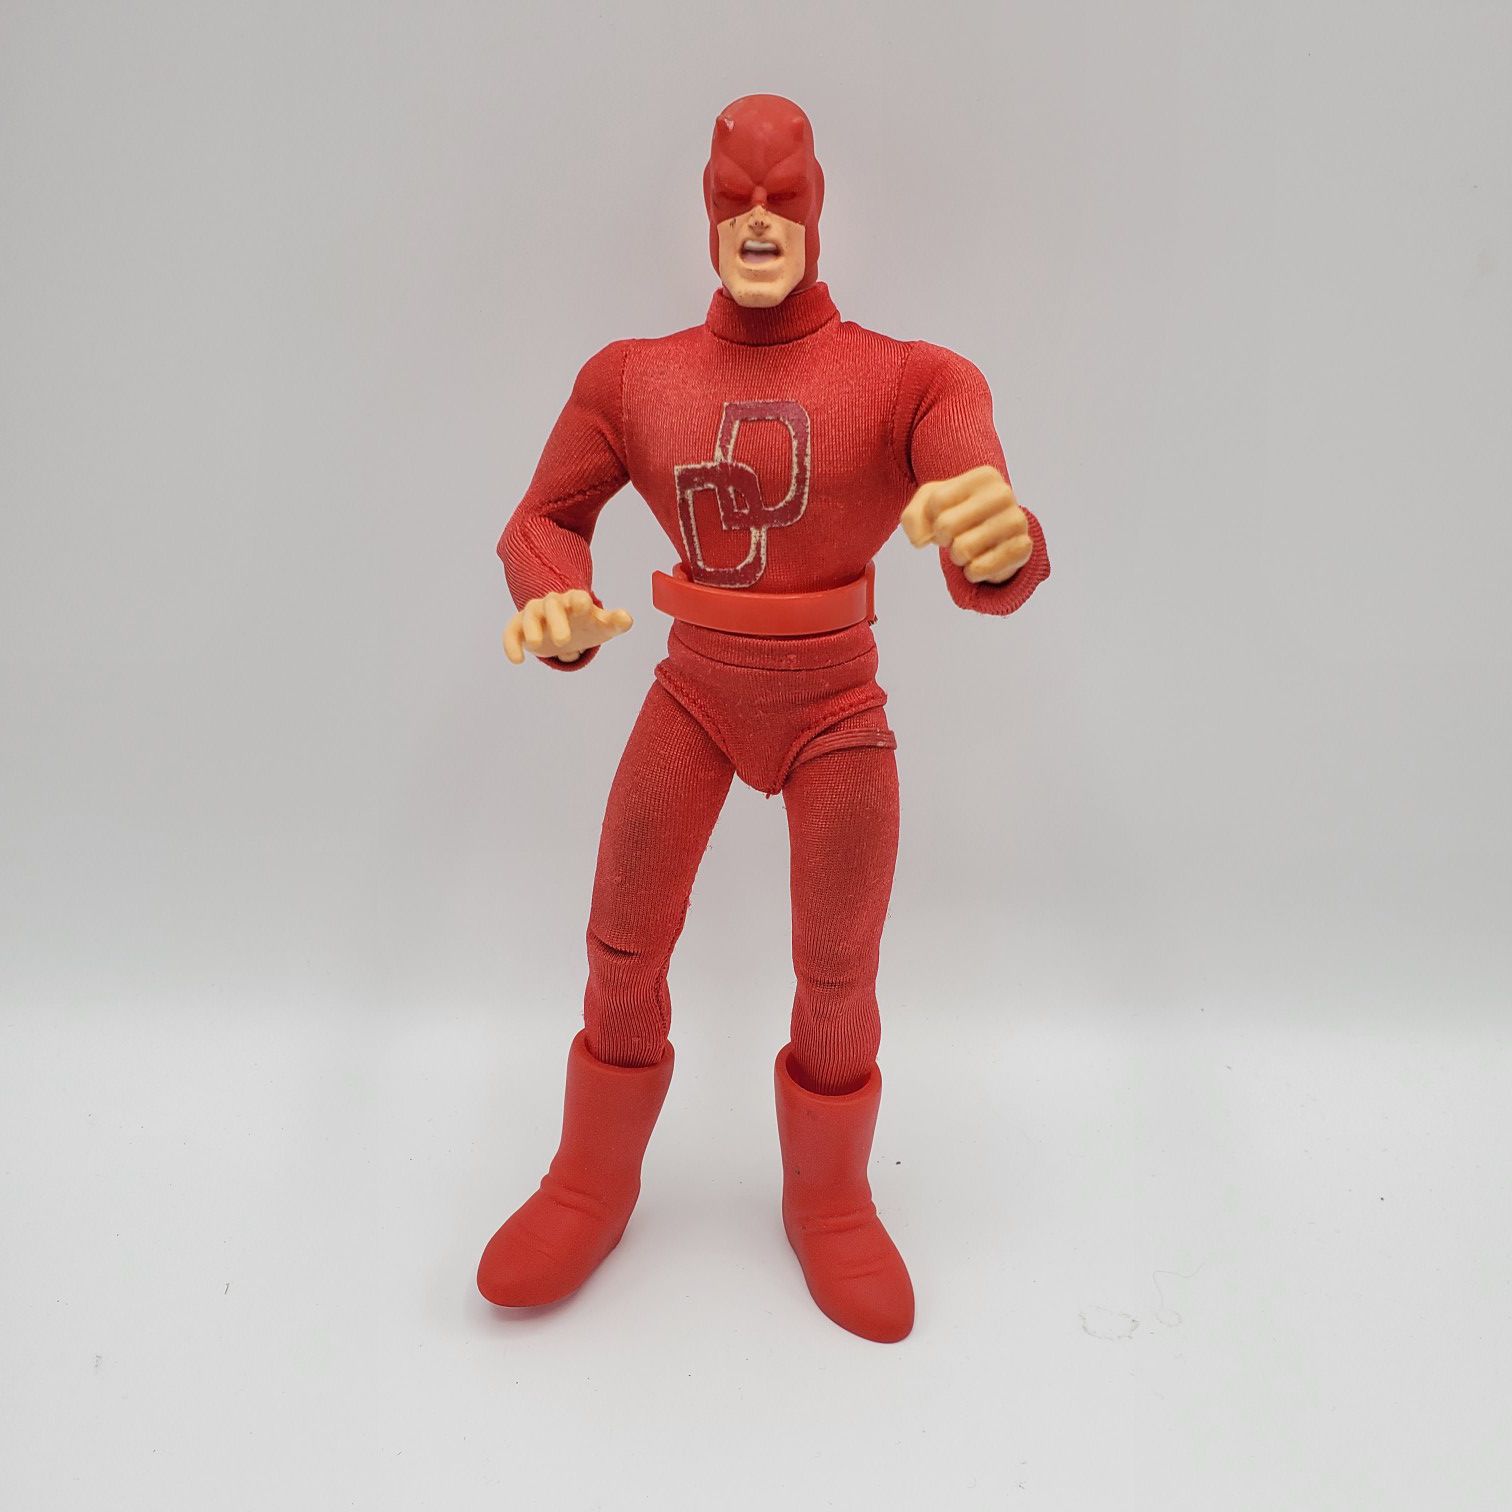 Vintage Marvel's Daredevil toy